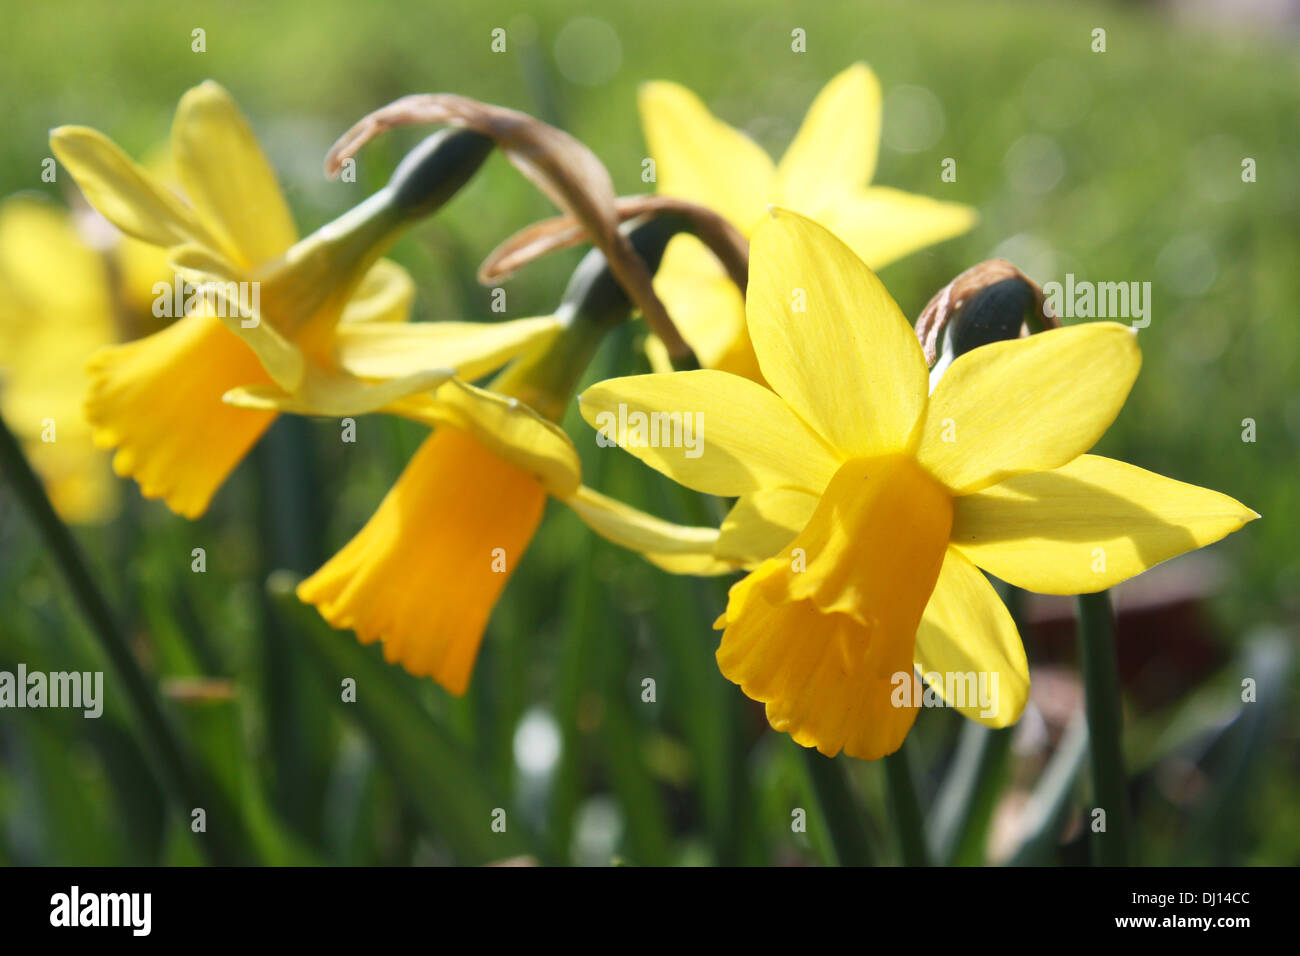 Narciso amarillo flores de primavera Foto de stock